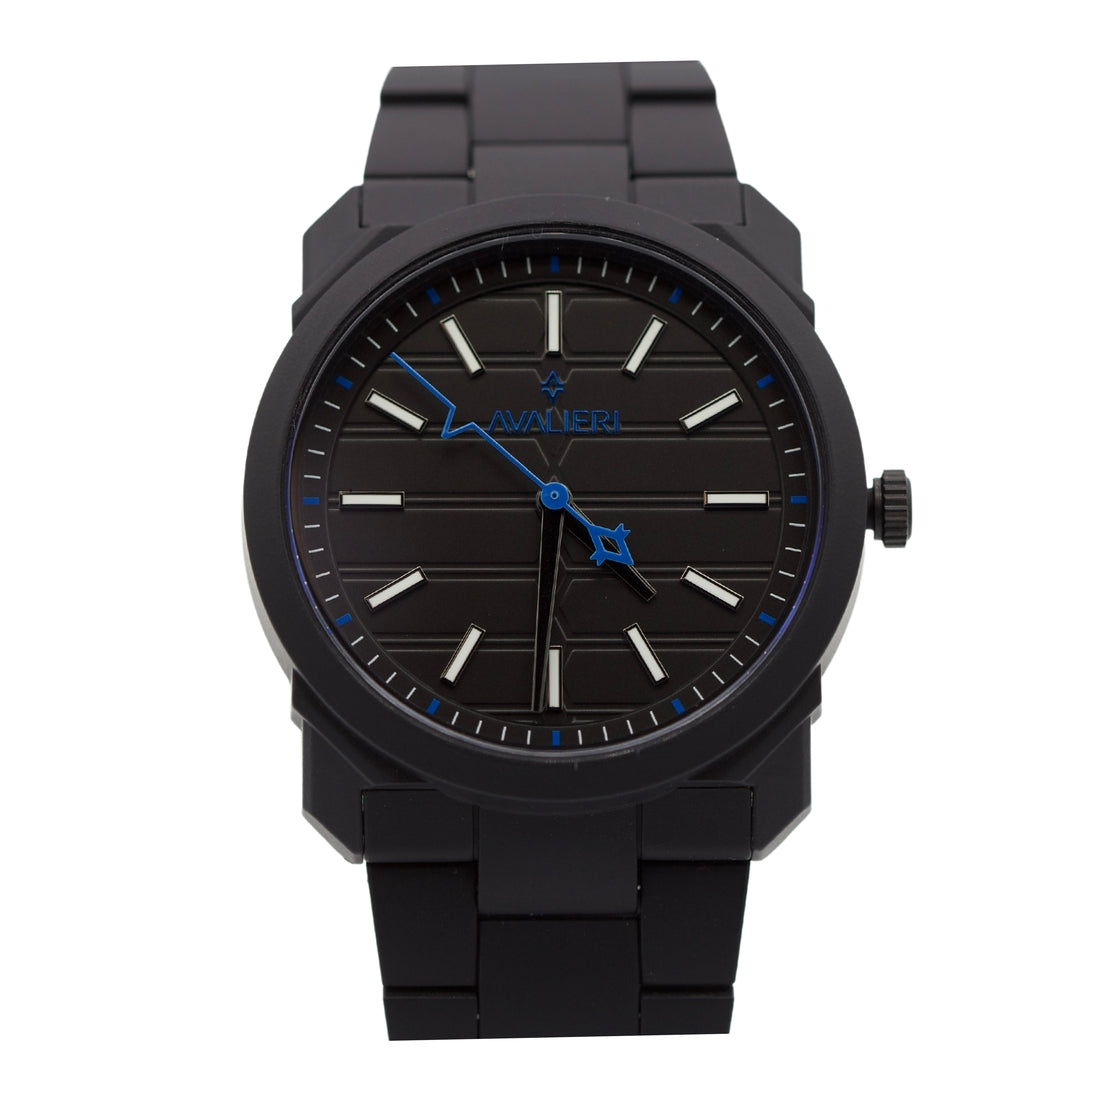 Avalieri Men's Quartz Watch with Black Dial - AV-2578B